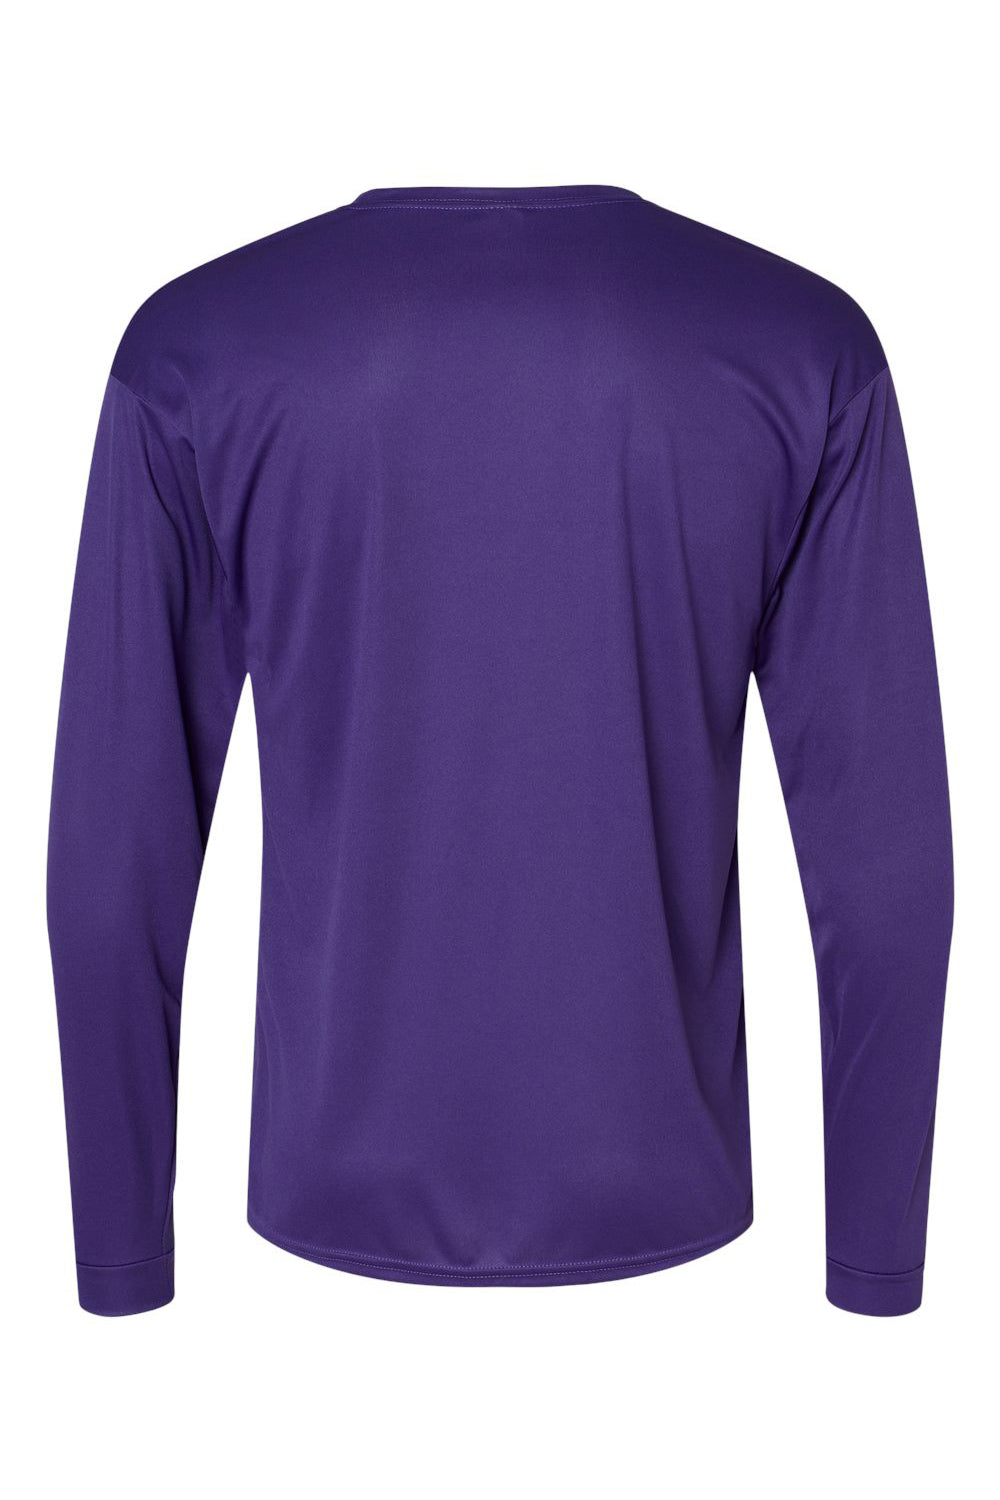 C2 Sport 5104 Mens Performance Moisture Wicking Long Sleeve Crewneck T-Shirt Purple Flat Back